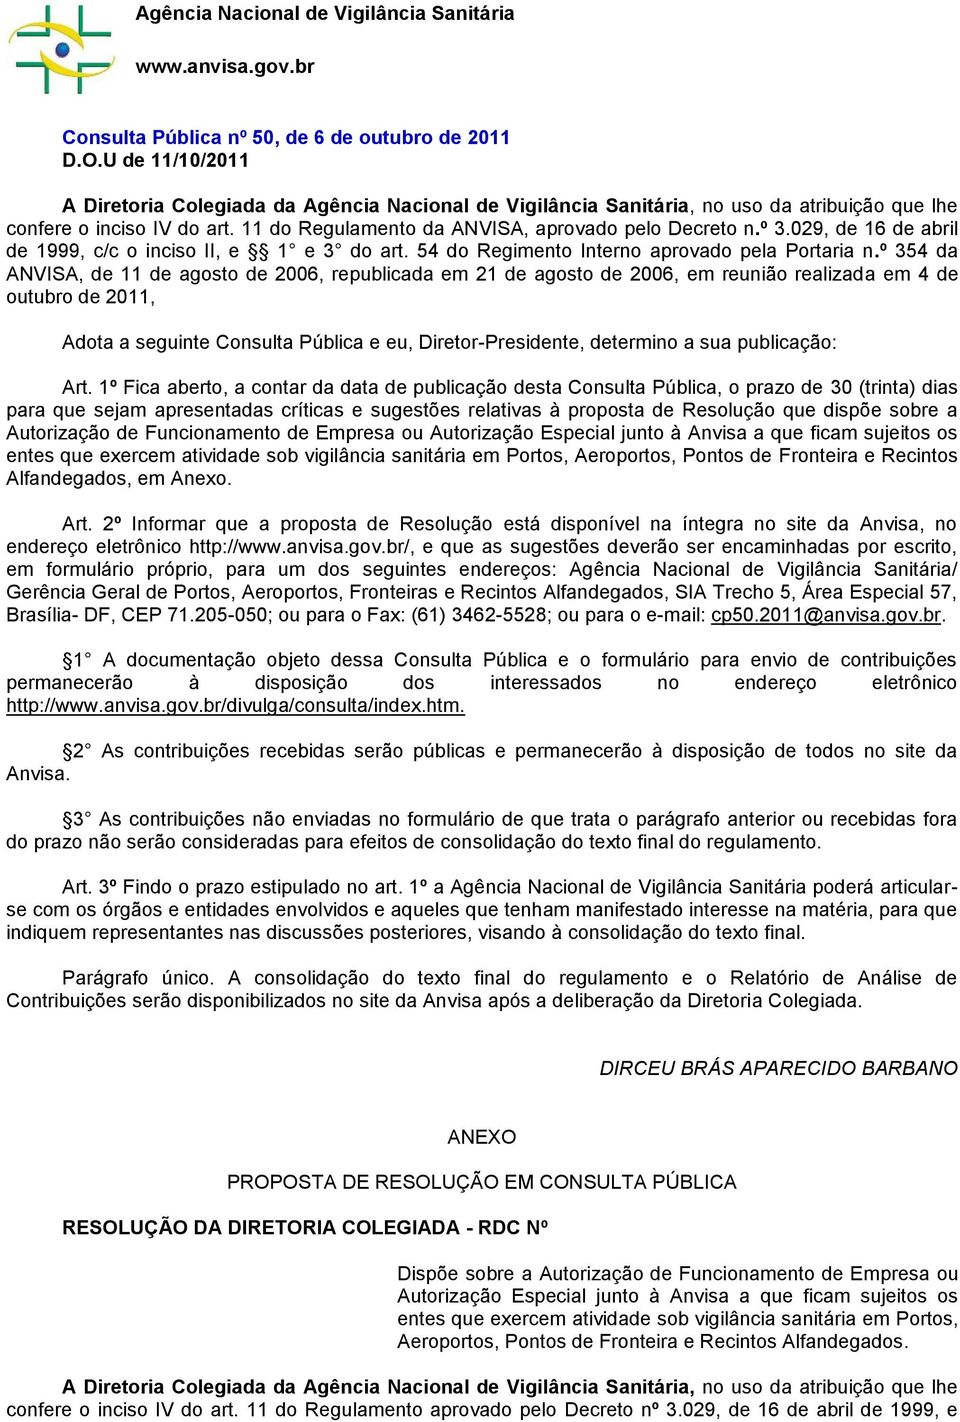 029, de 16 de abril de 1999, c/c o inciso II, e 1 e 3 do art. 54 do Regimento Interno aprovado pela Portaria n.